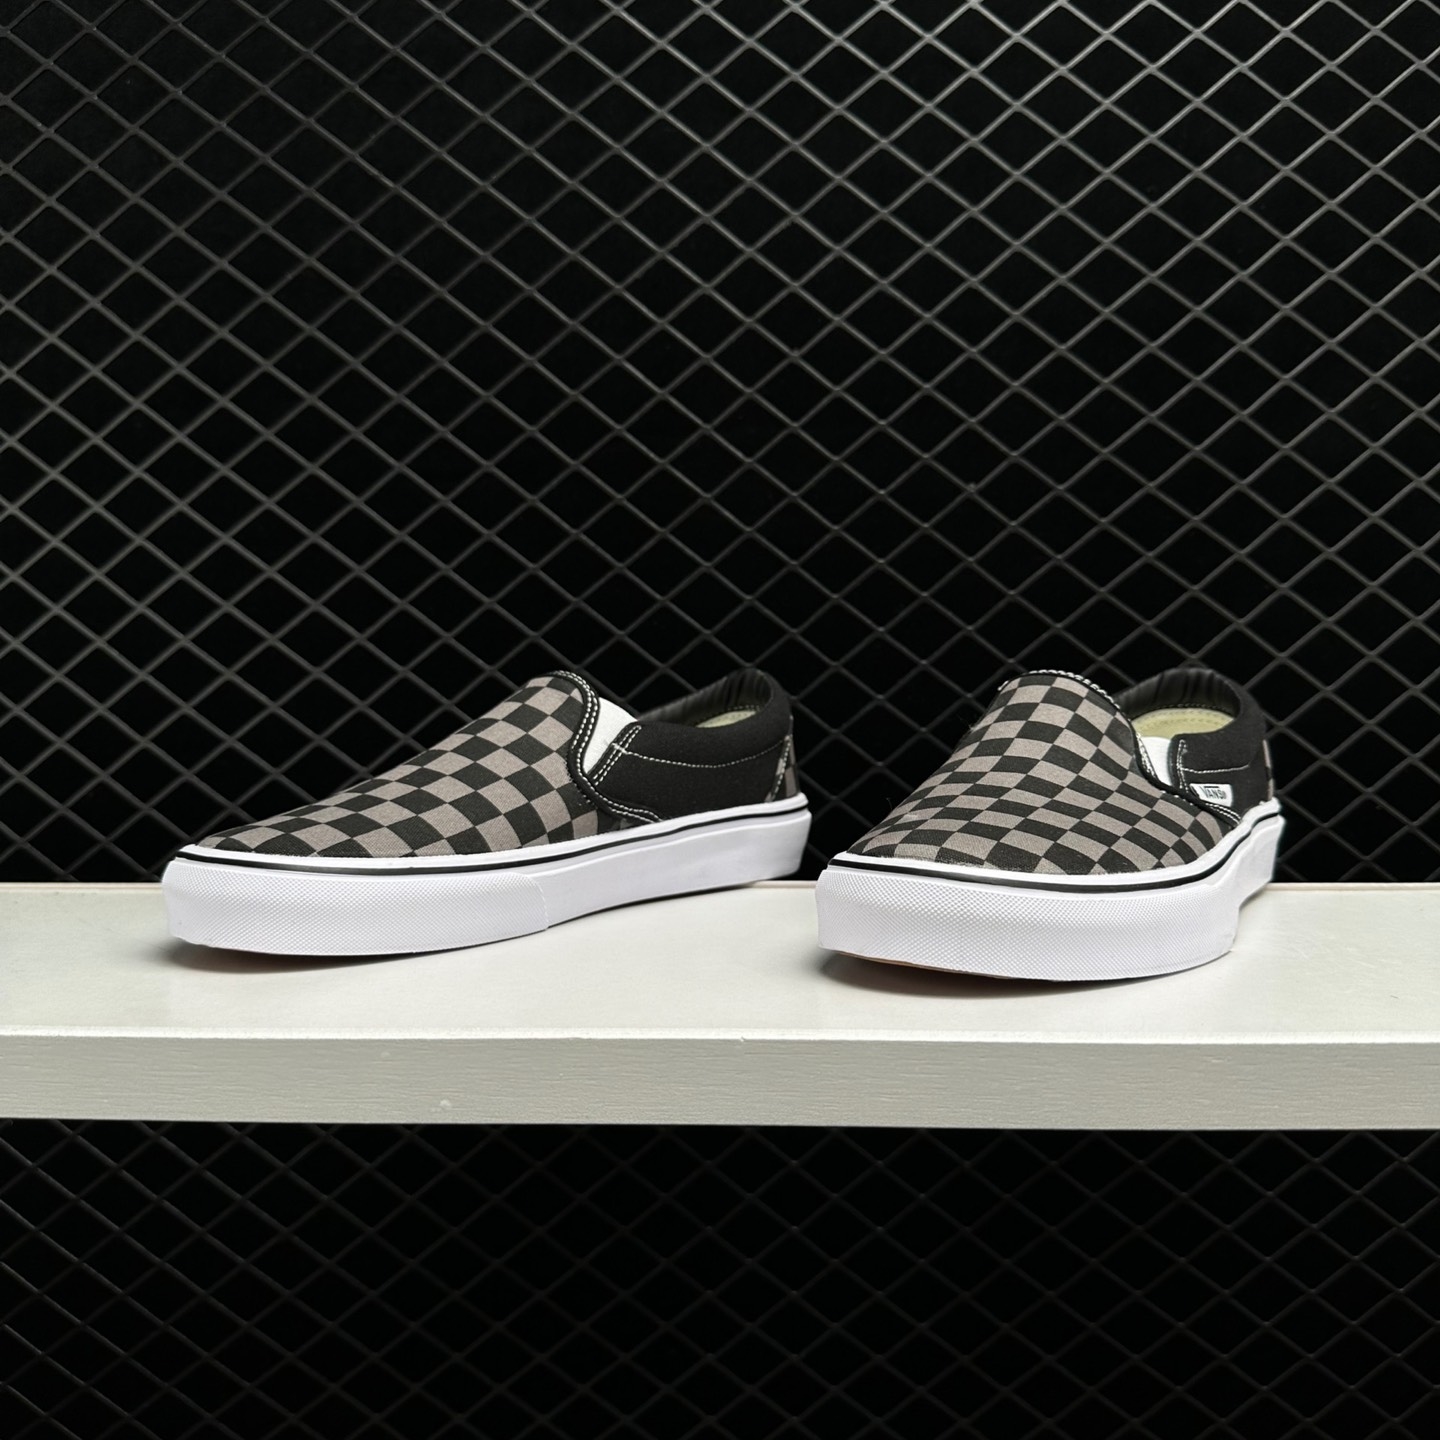 Vans Slip-On Black Pewter Checkerboard VN000EYEBPJ - Stylish and Classic Slip-On Shoes